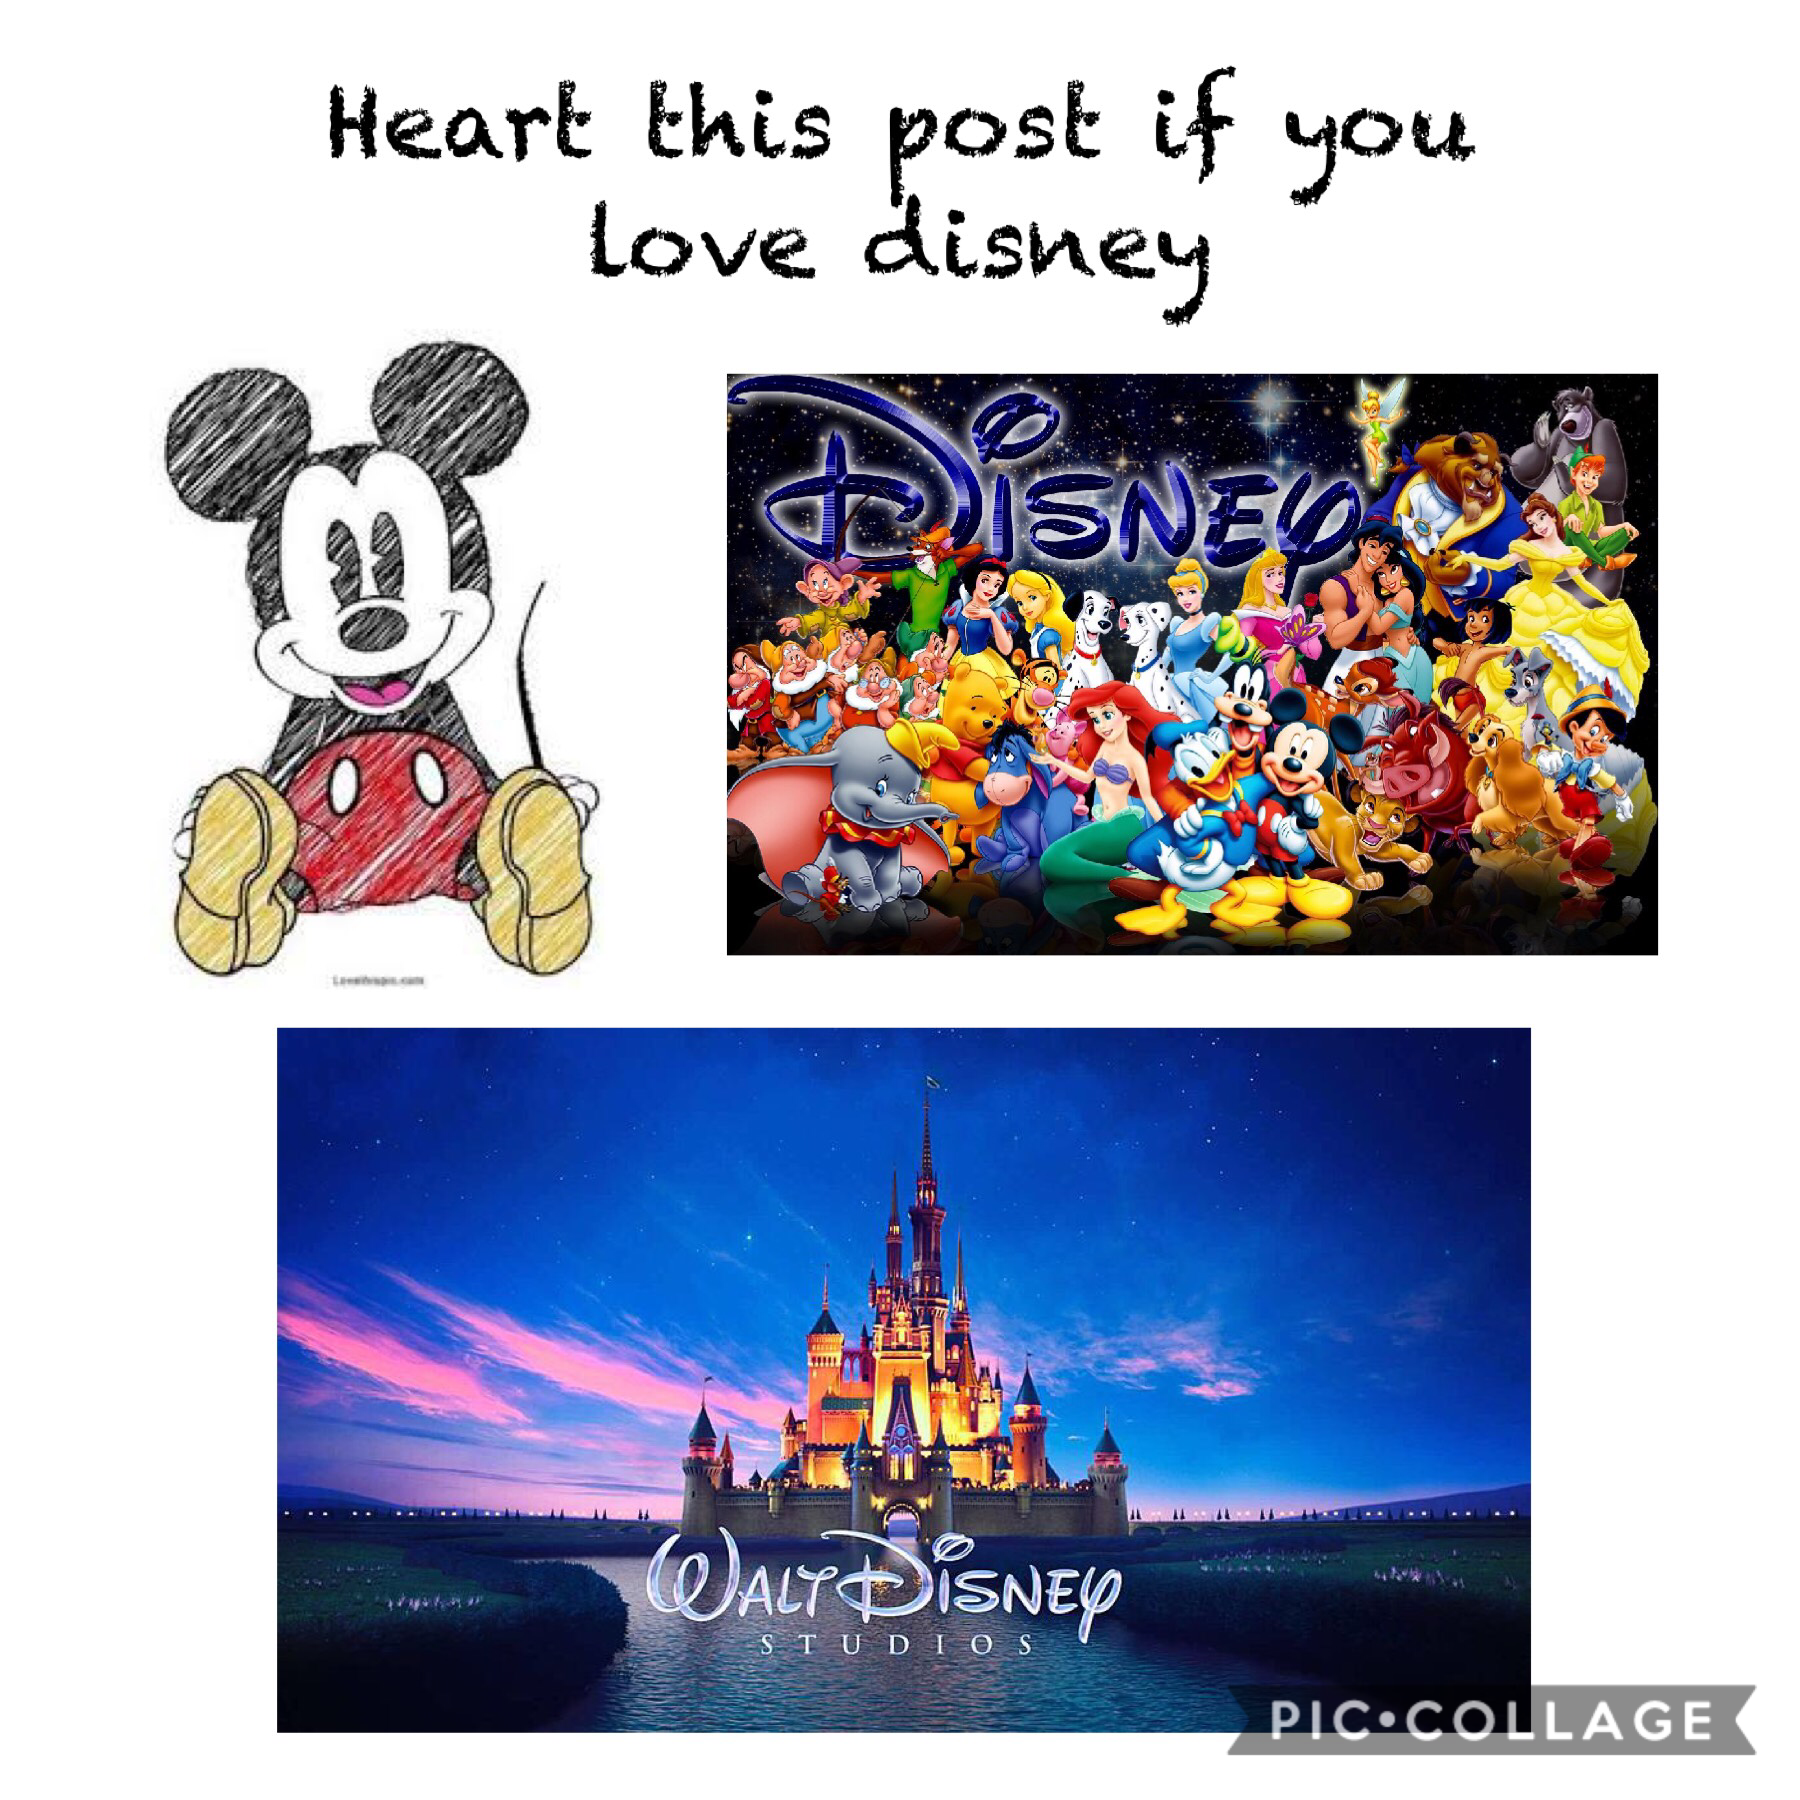 Collage by DisneyArtist